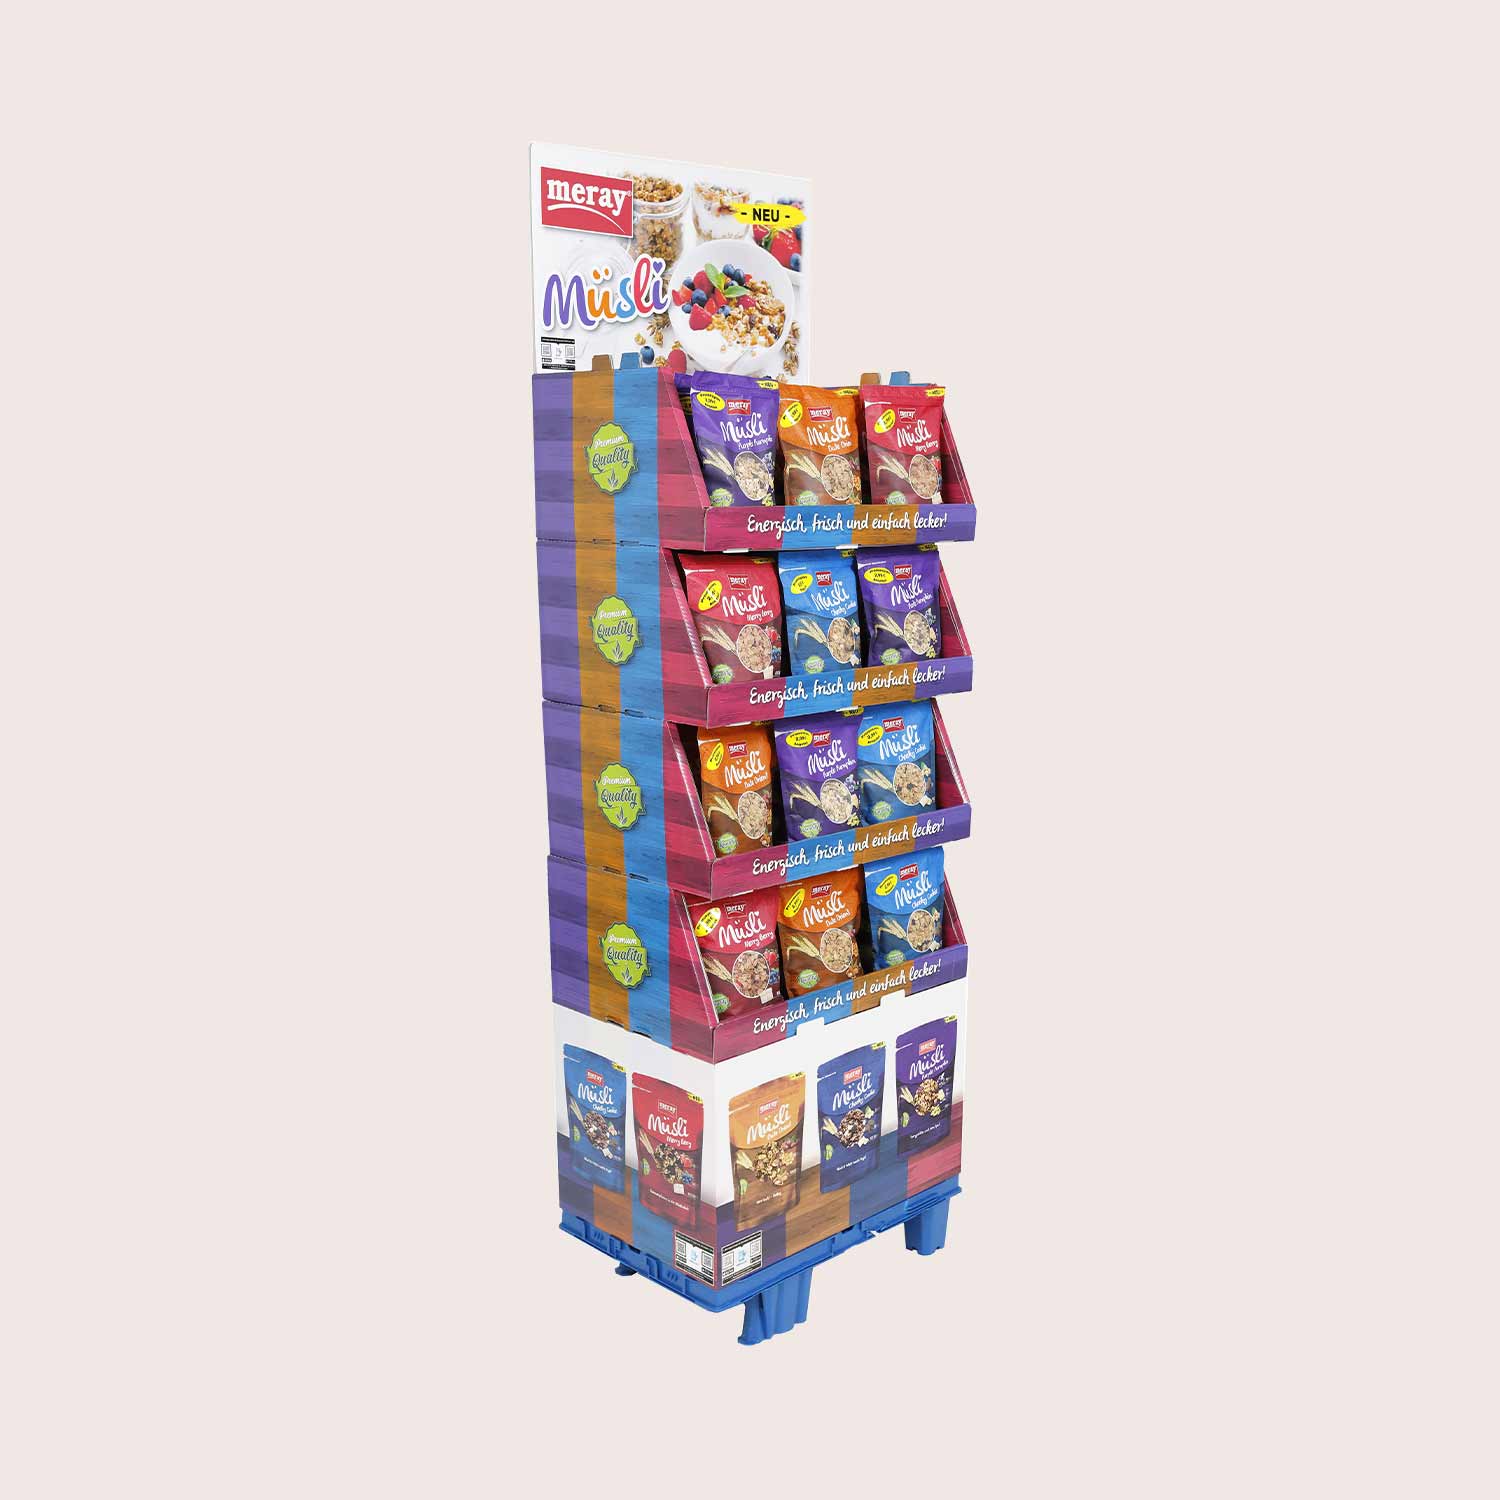 Sales displays for snacks